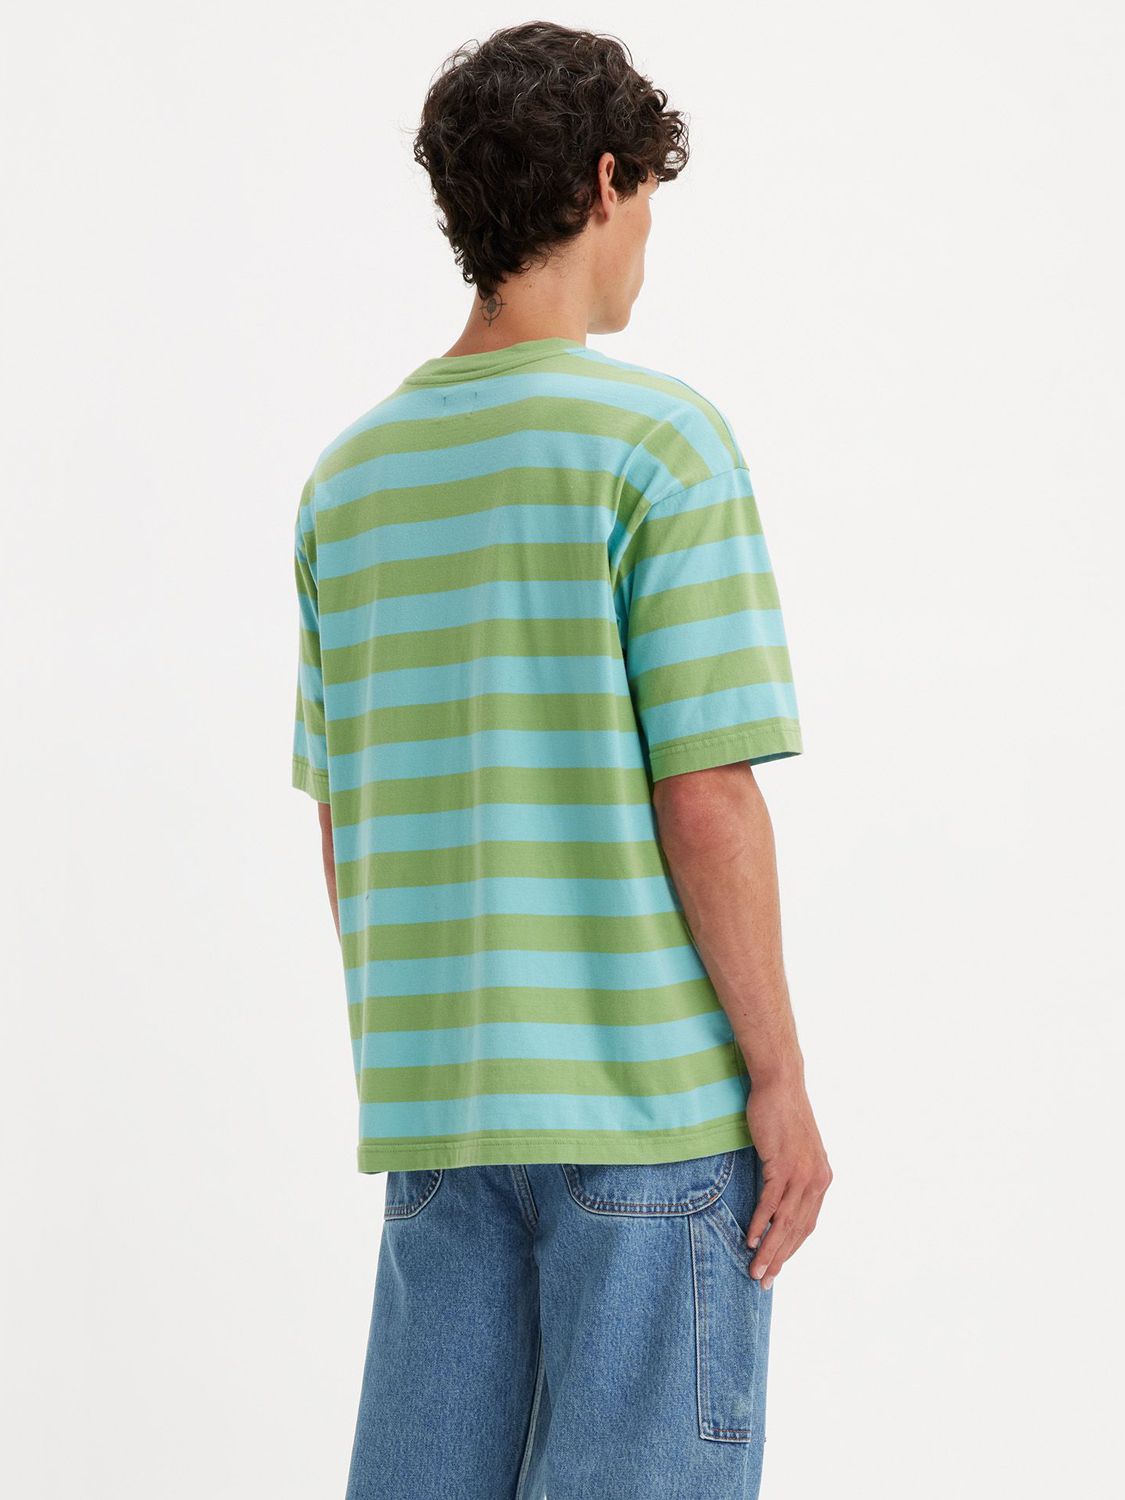 Levi's Skate Small Stripe Graph T-Shirt, Blue/Grey, M